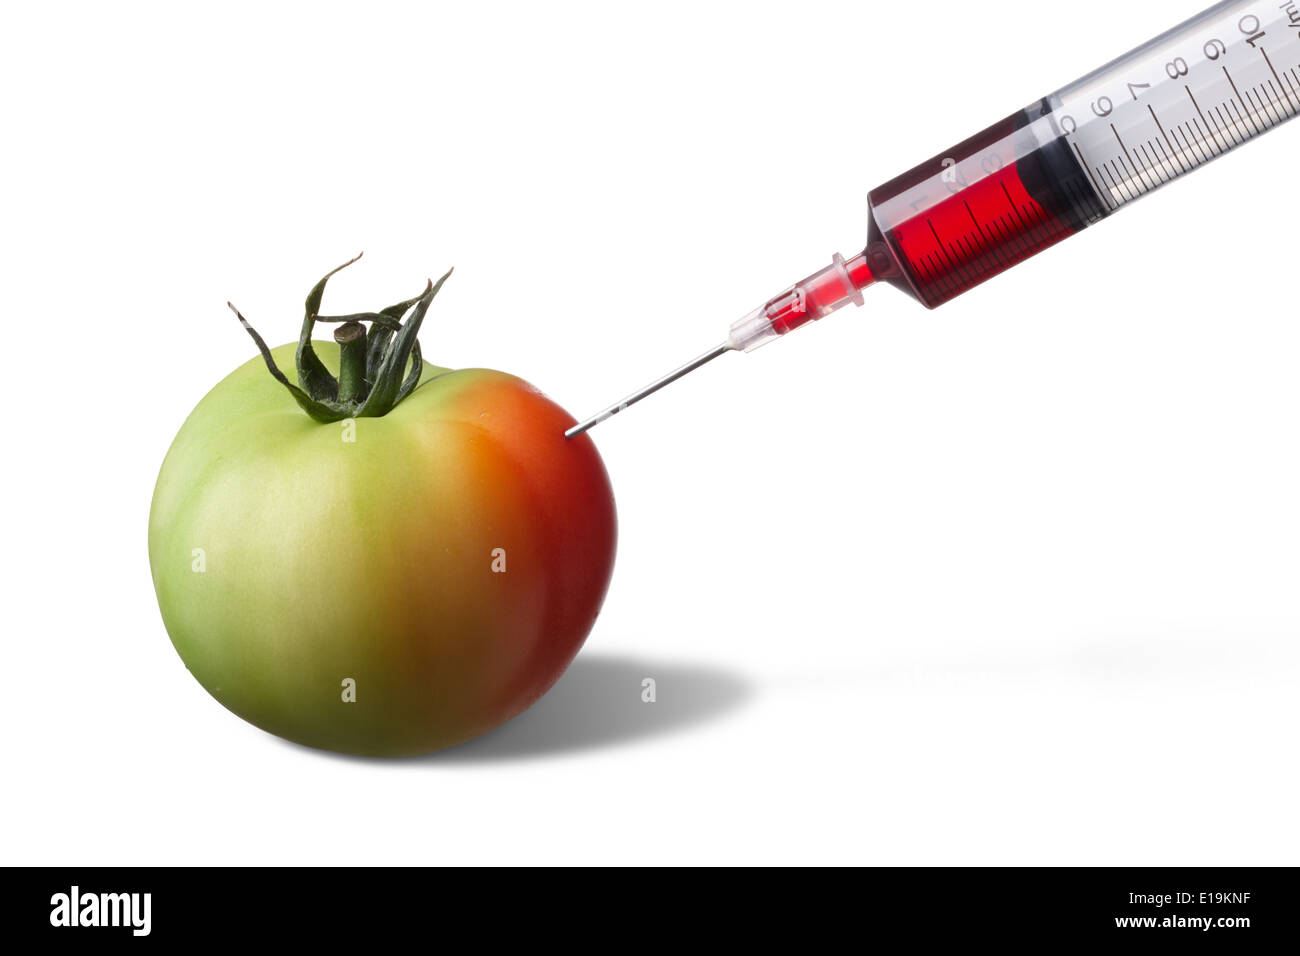 syringe injecting on unripe tomato forcing it to ripe faster Stock Photo